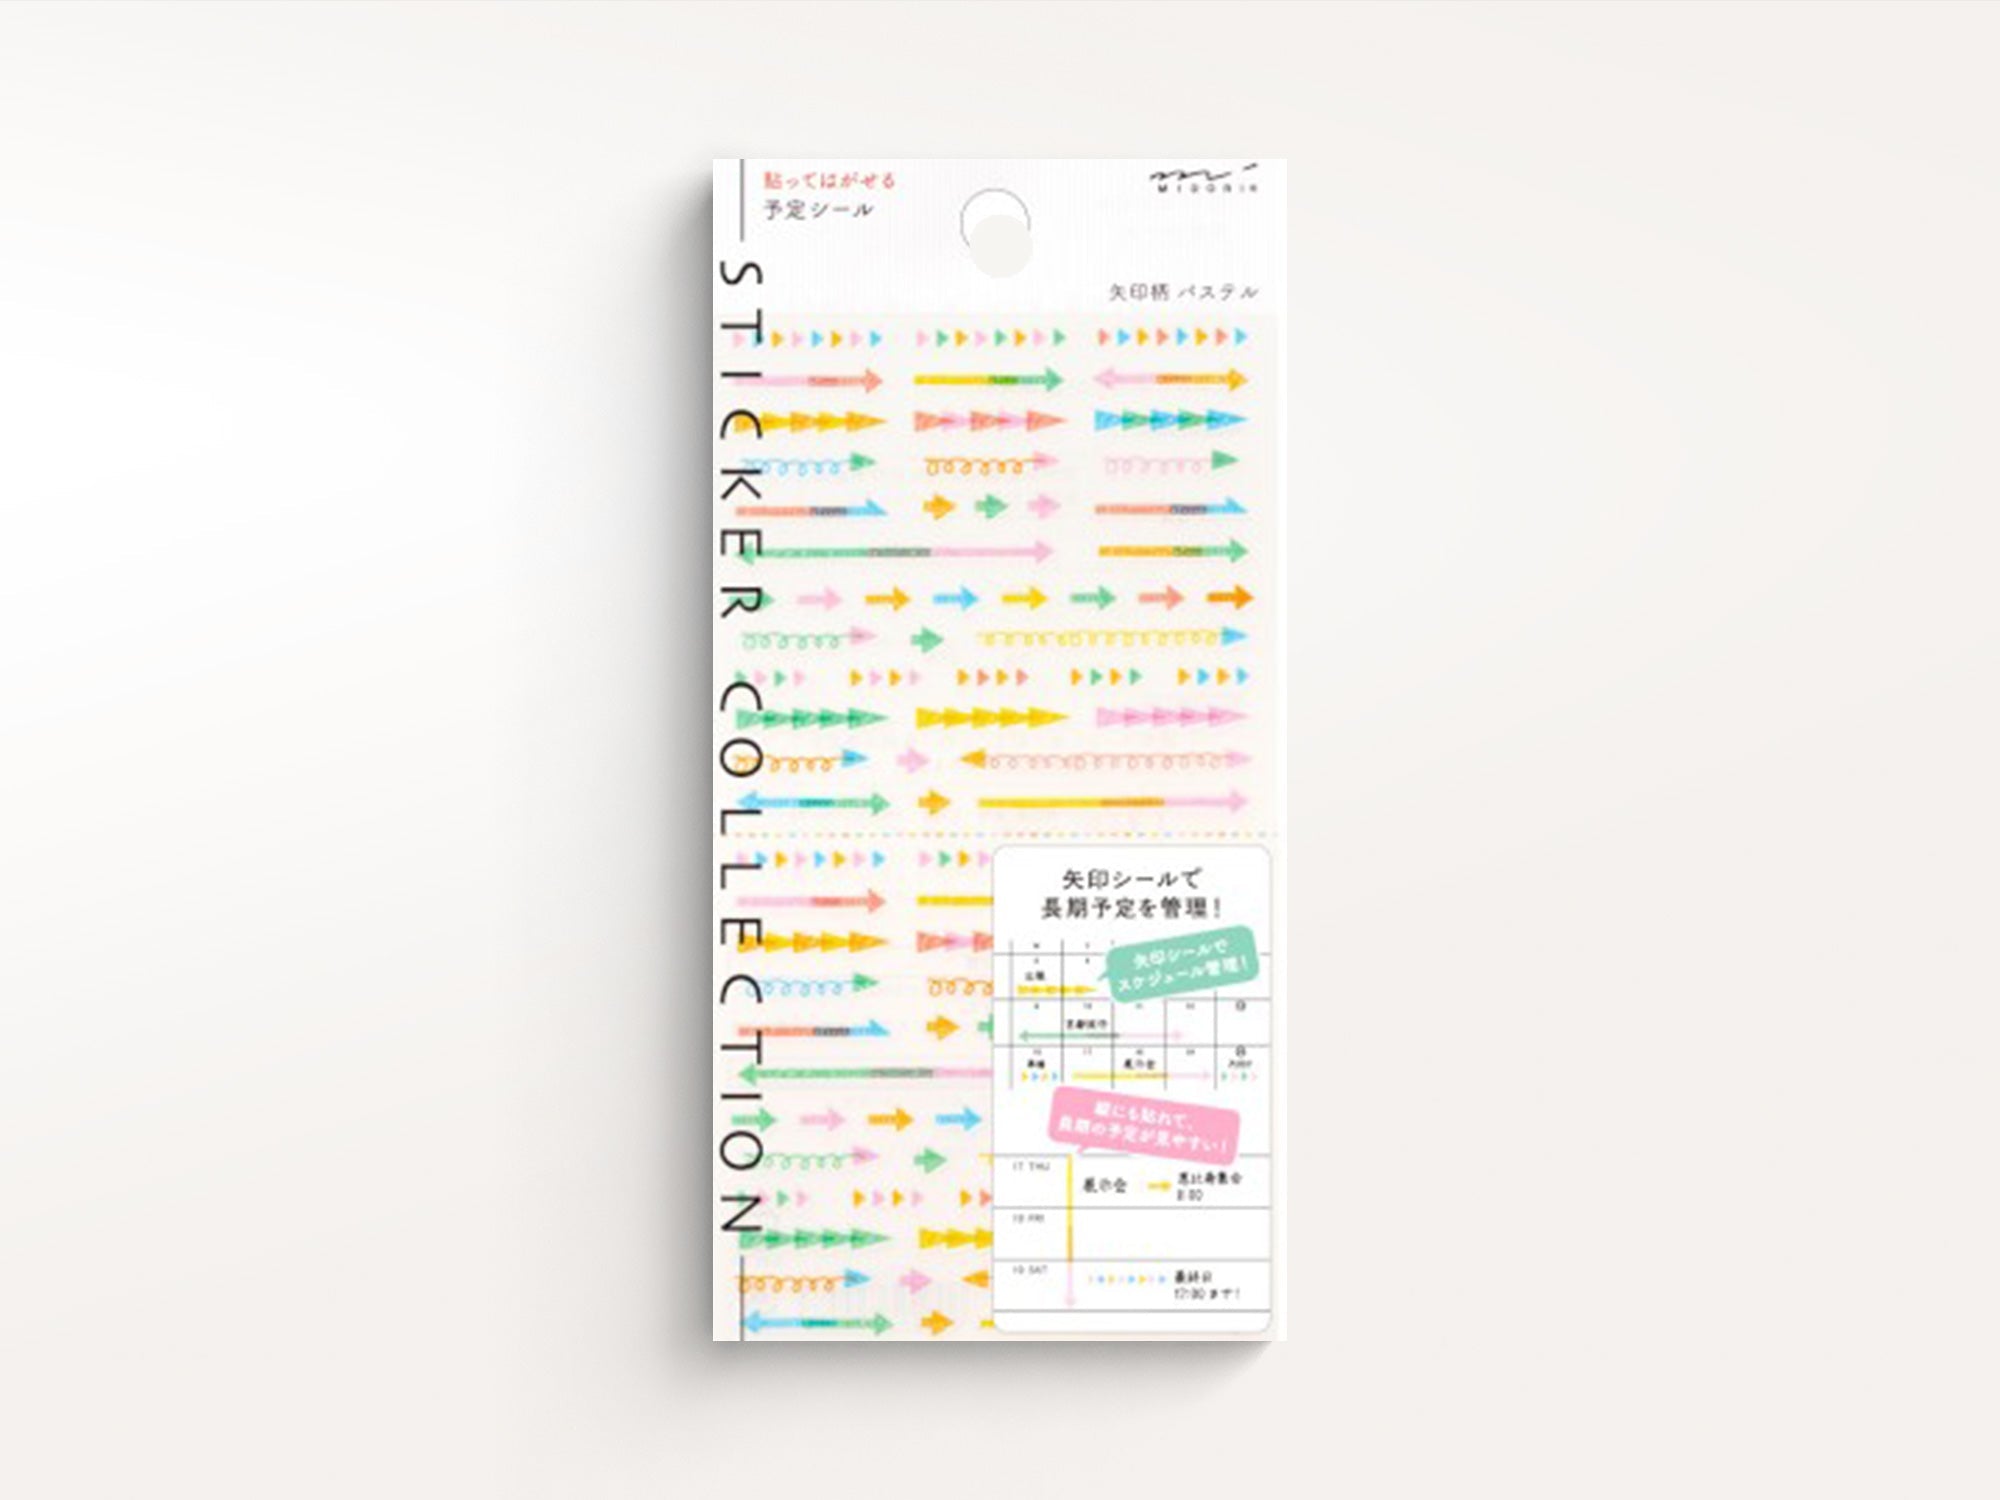 Midori Planner/Diary Stickers - Animal Scenes